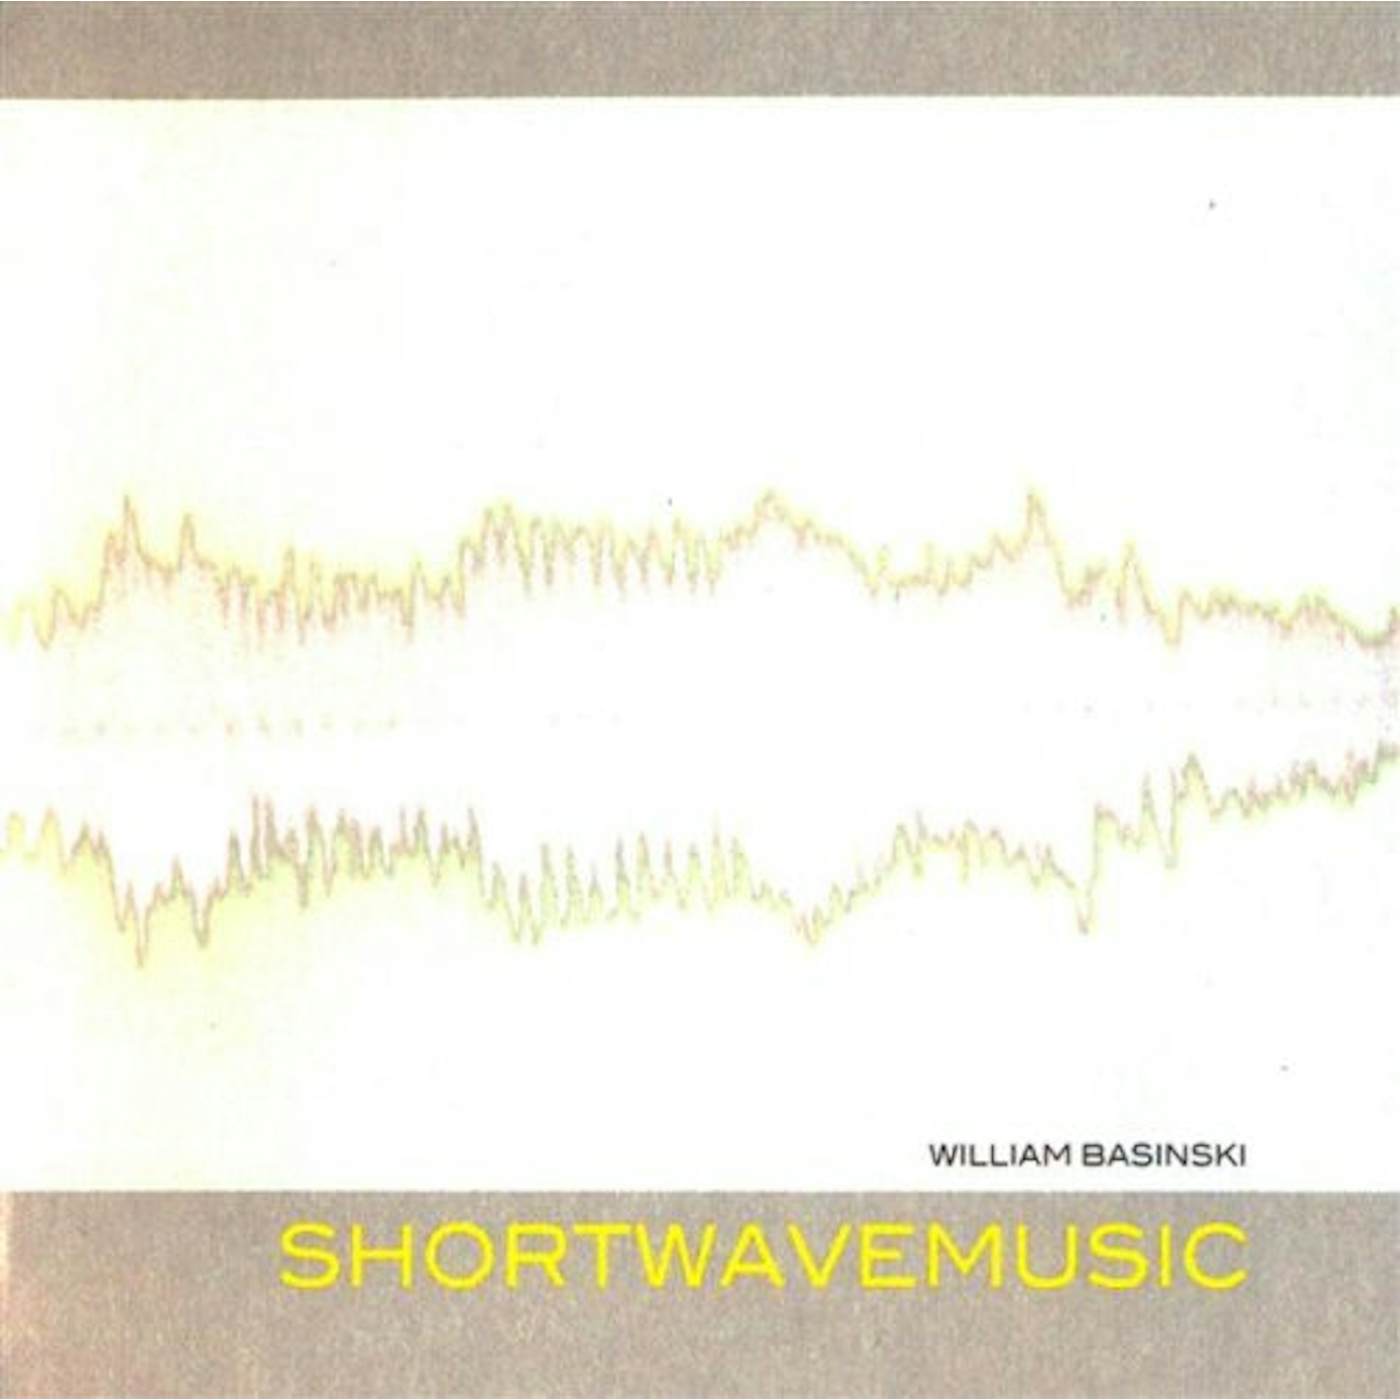 William Basinski SHORTWAVEMUSIC CD